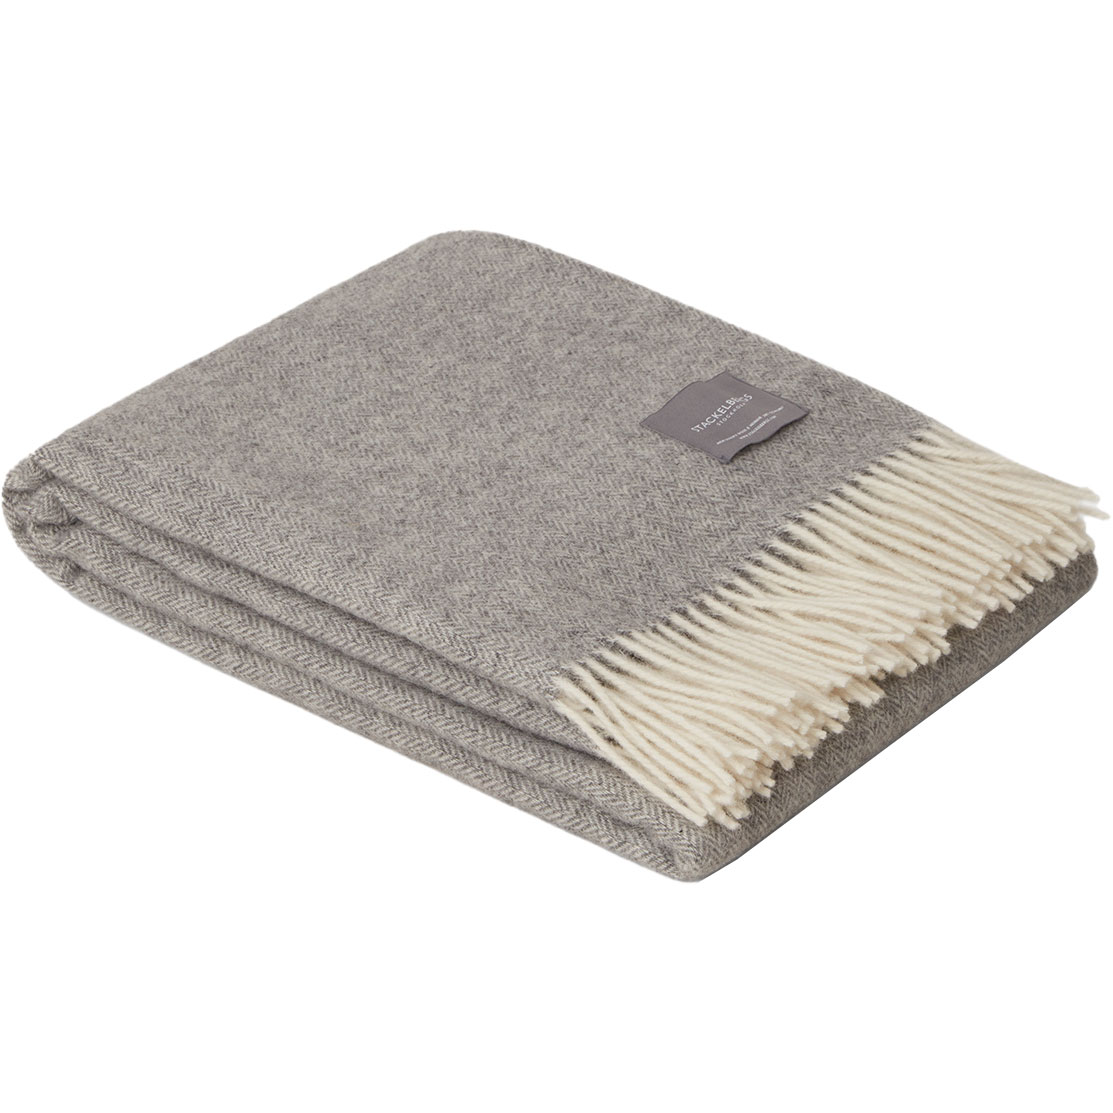 Wool Fishbone Blanket 130x170 cm, Light Grey/Off-white